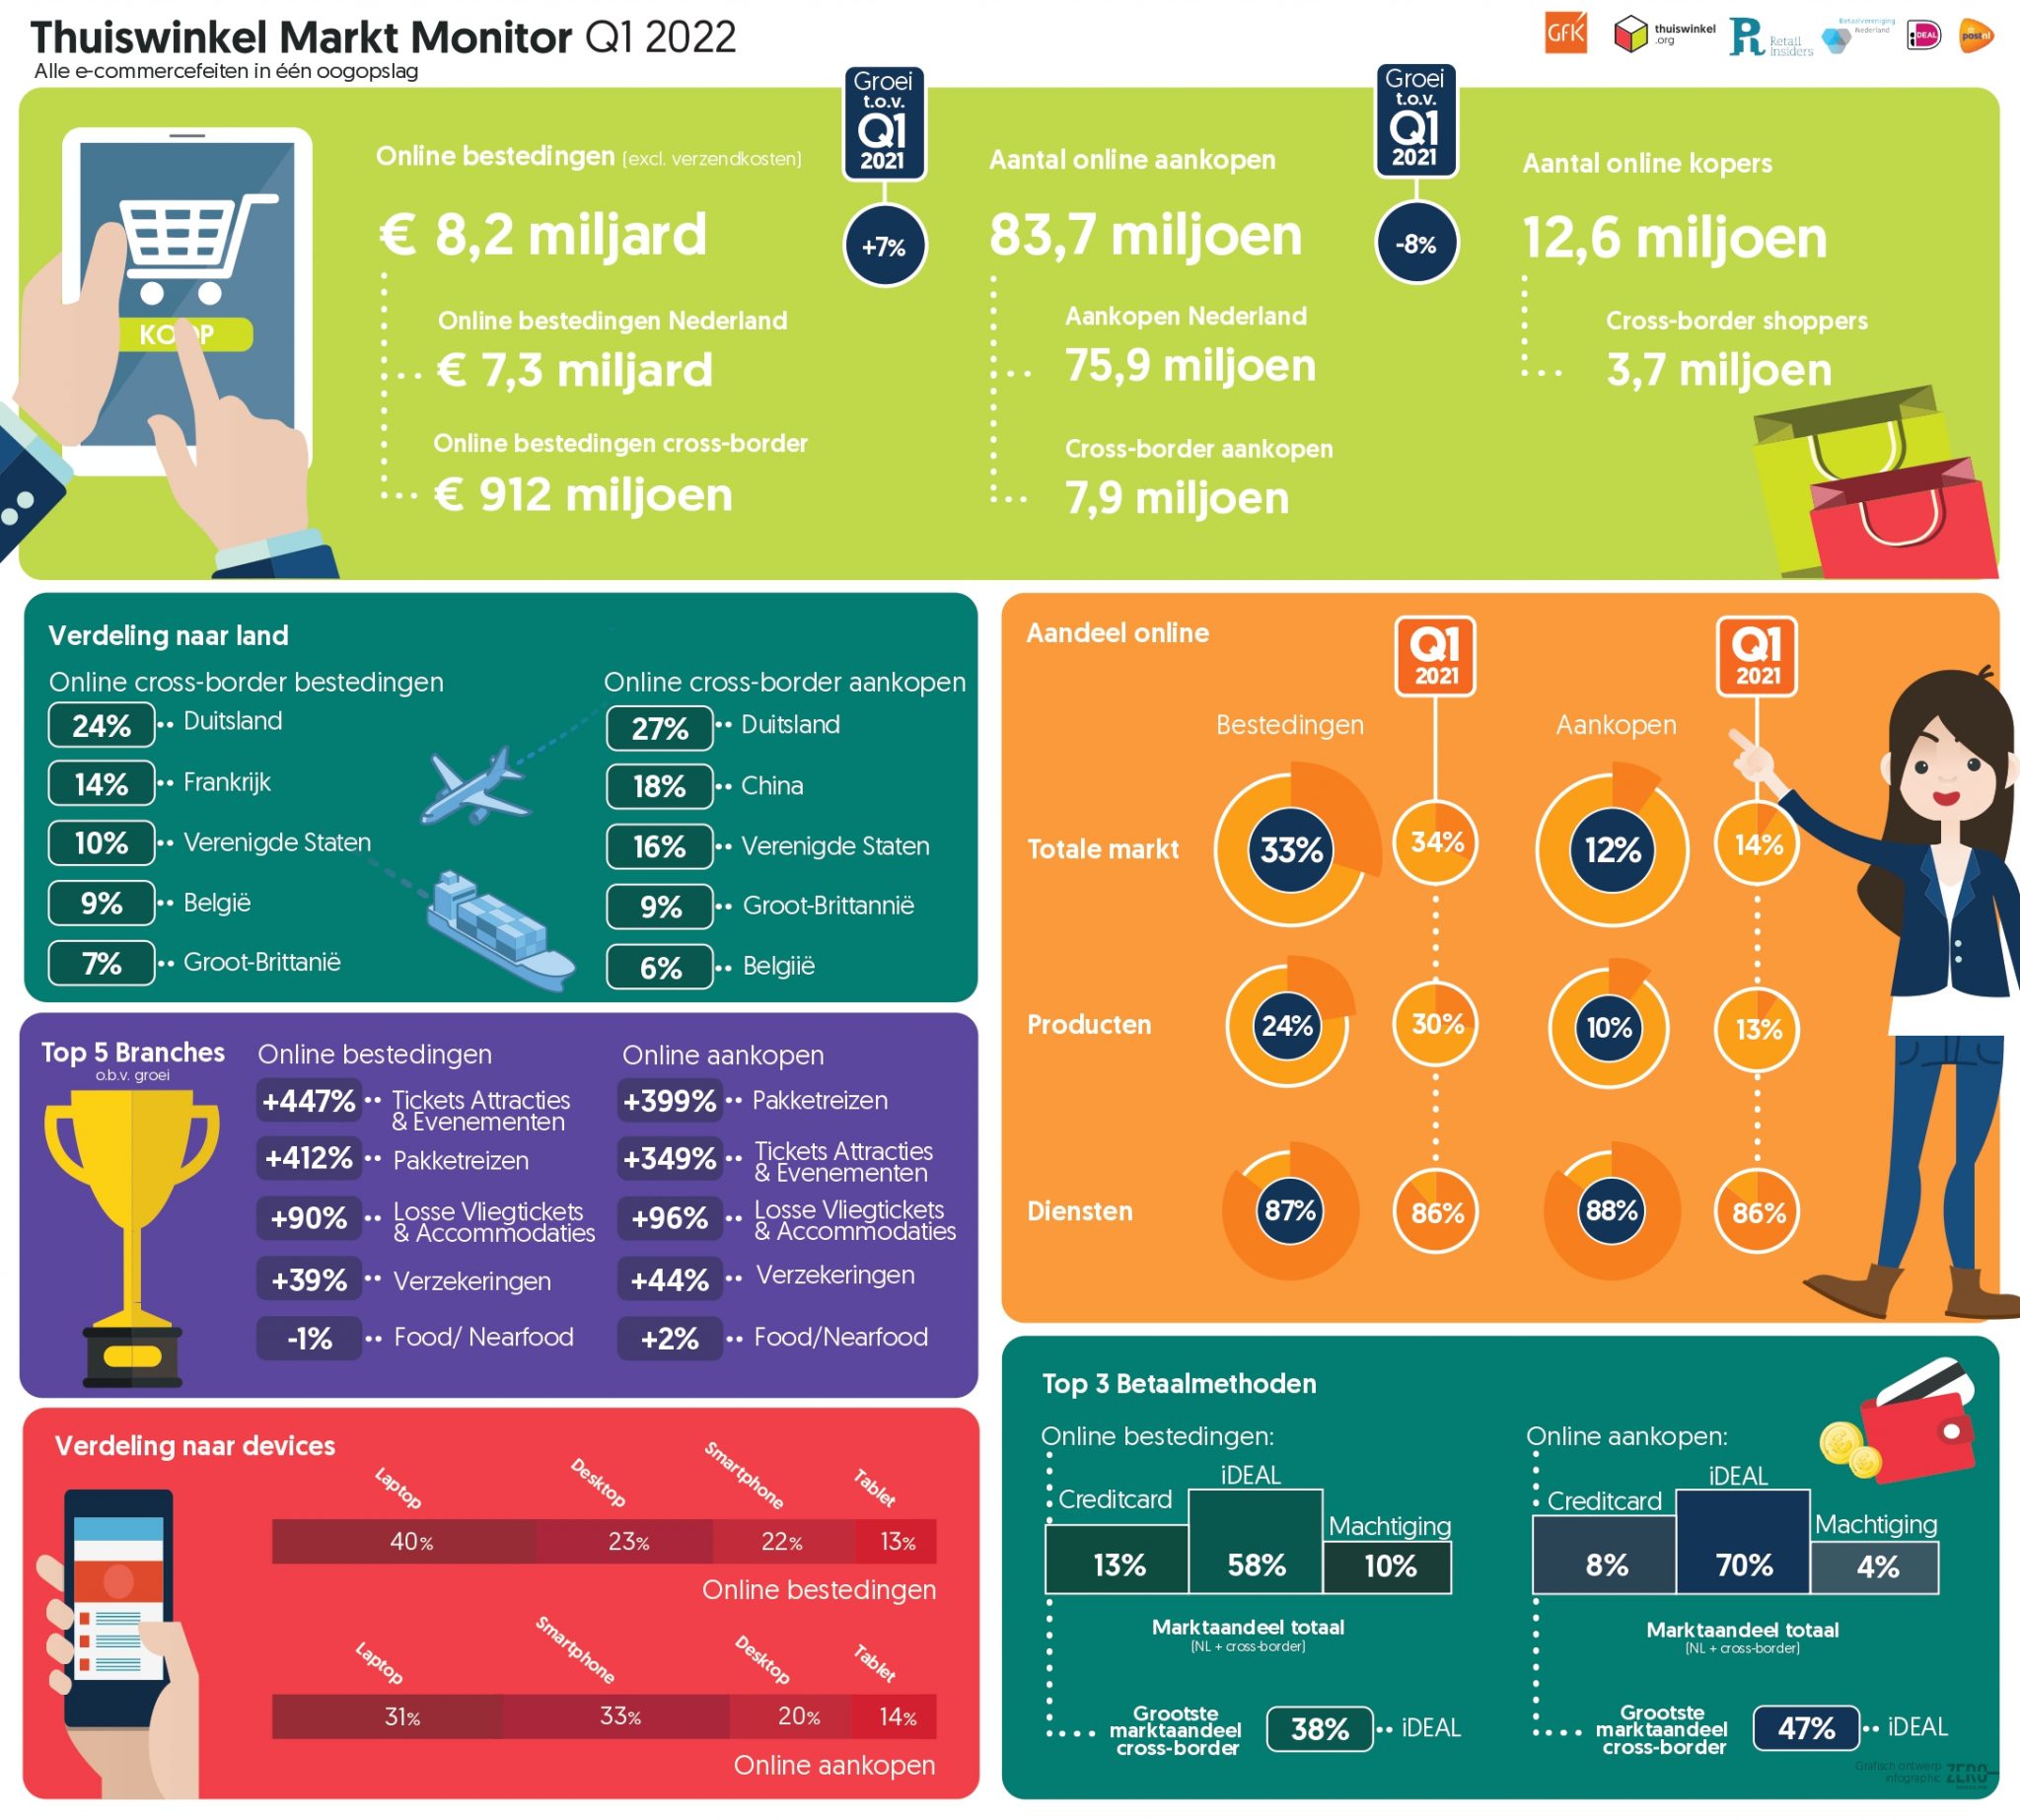 infographic_thuiswinkel_markt_monitor_2022_Q1101687_page-0001-2048x1845